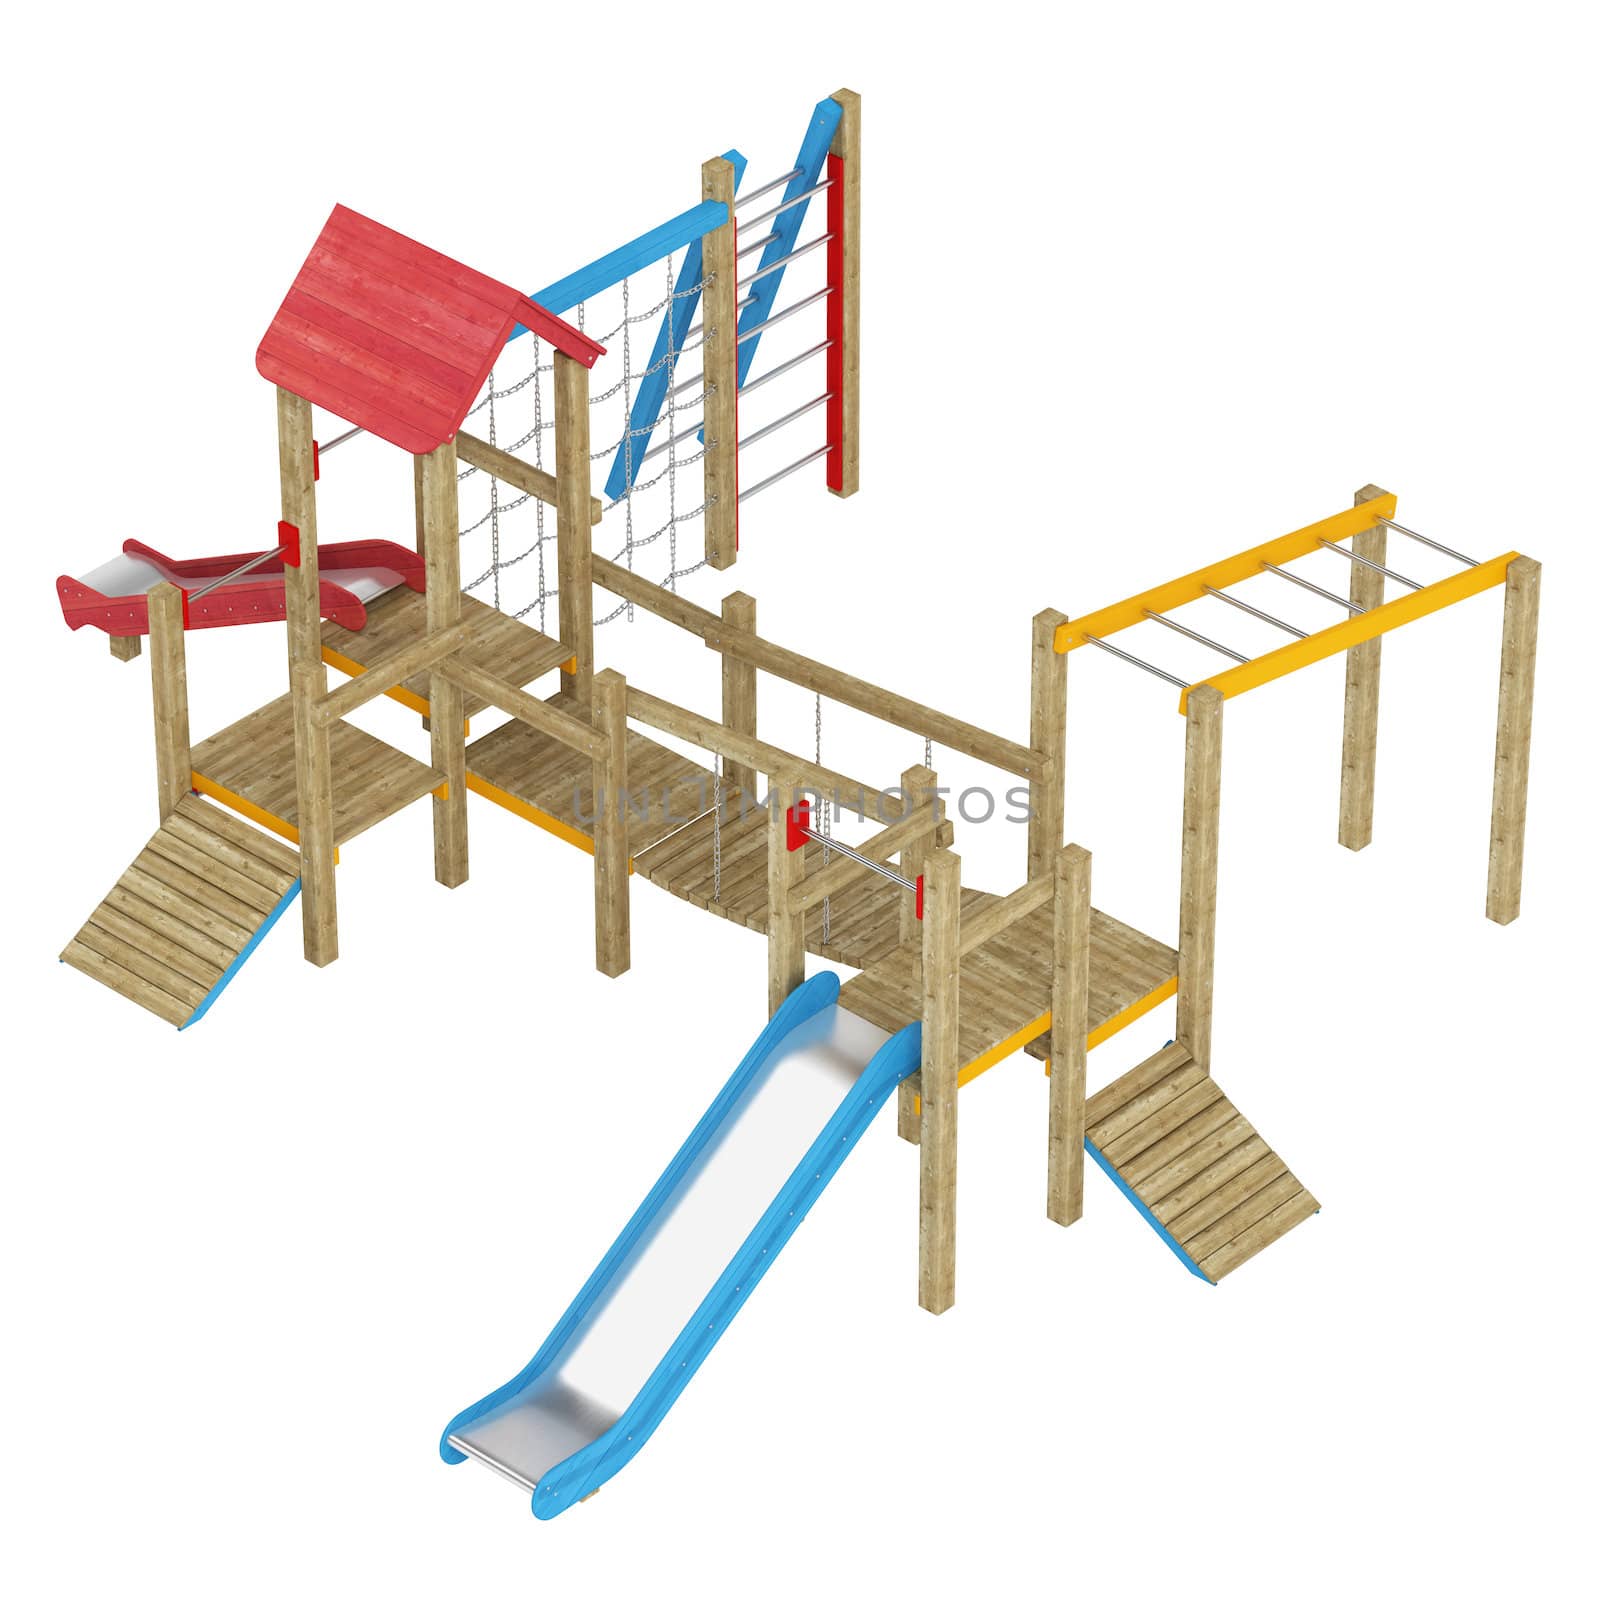 Playground apparatus with slides by AlexanderMorozov